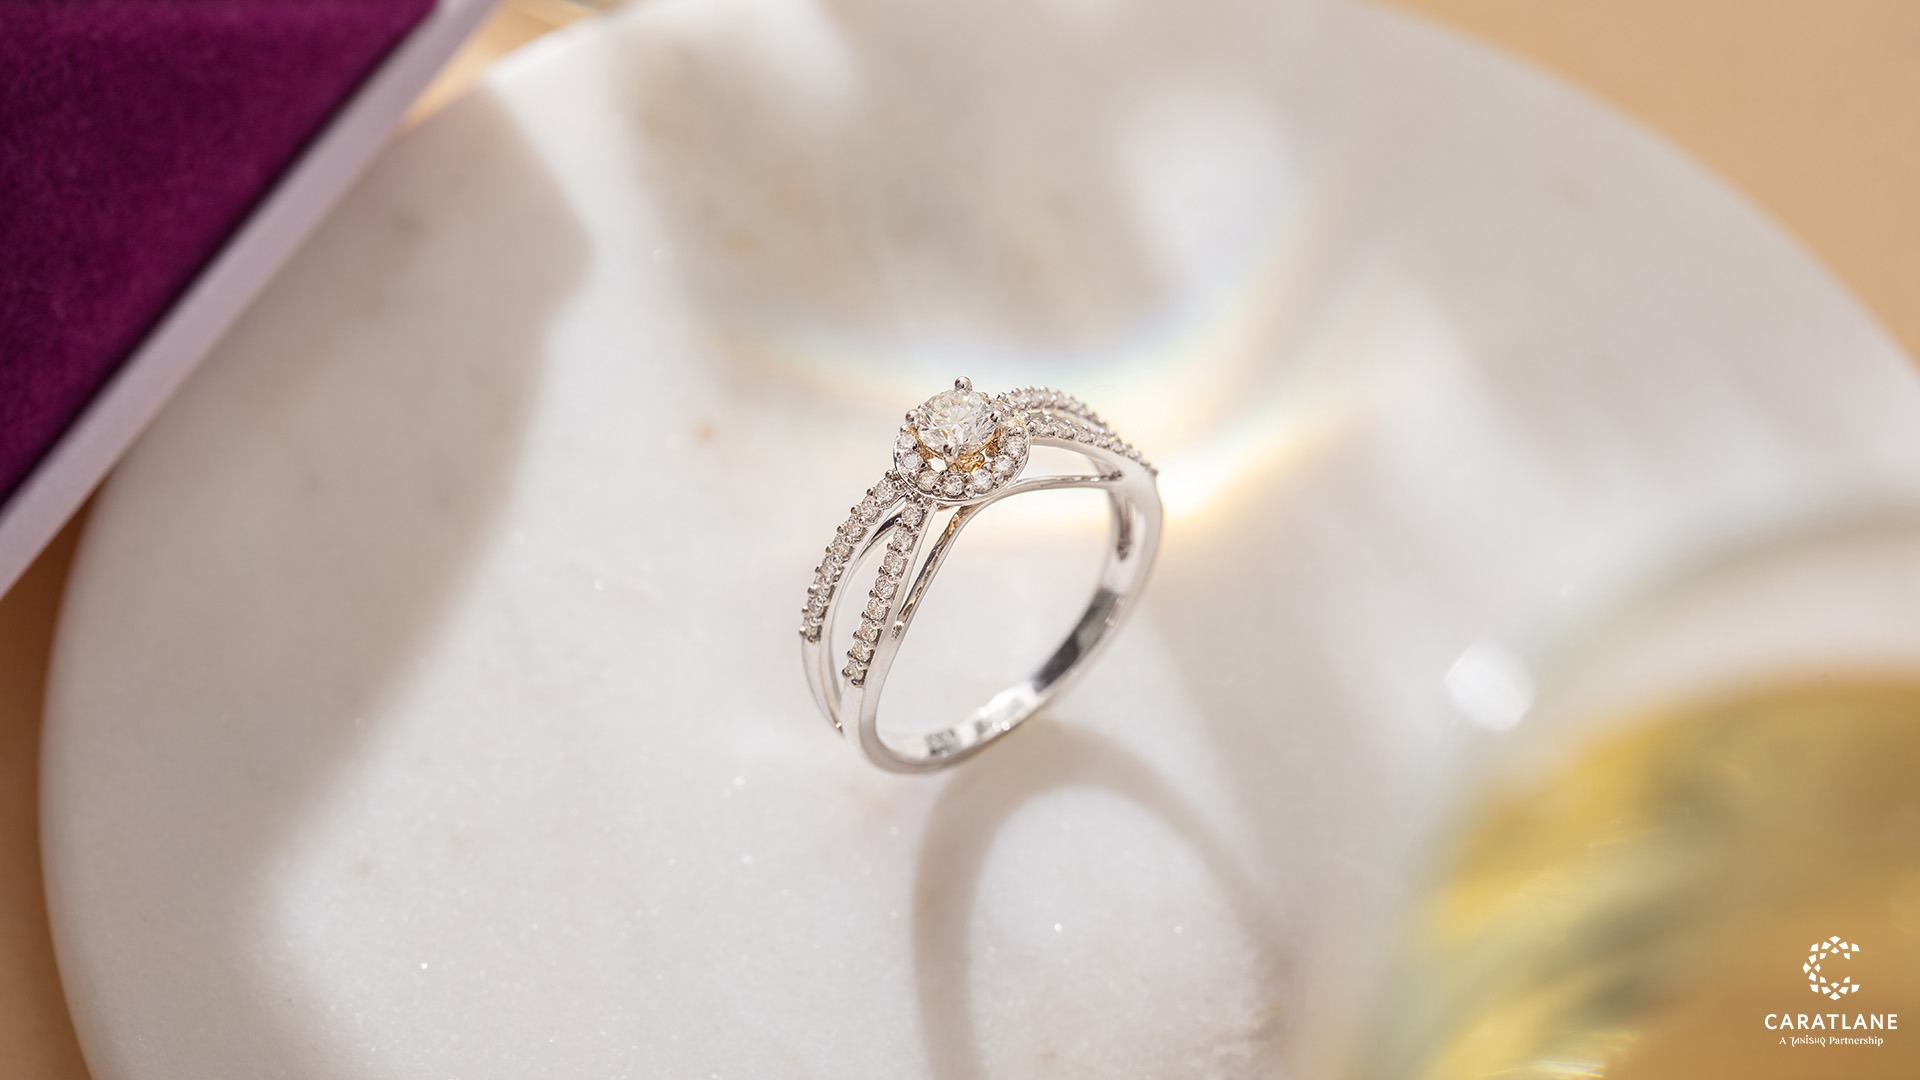 You & Me Two Stone 1ctw. Diamond Ring in 14k White Gold